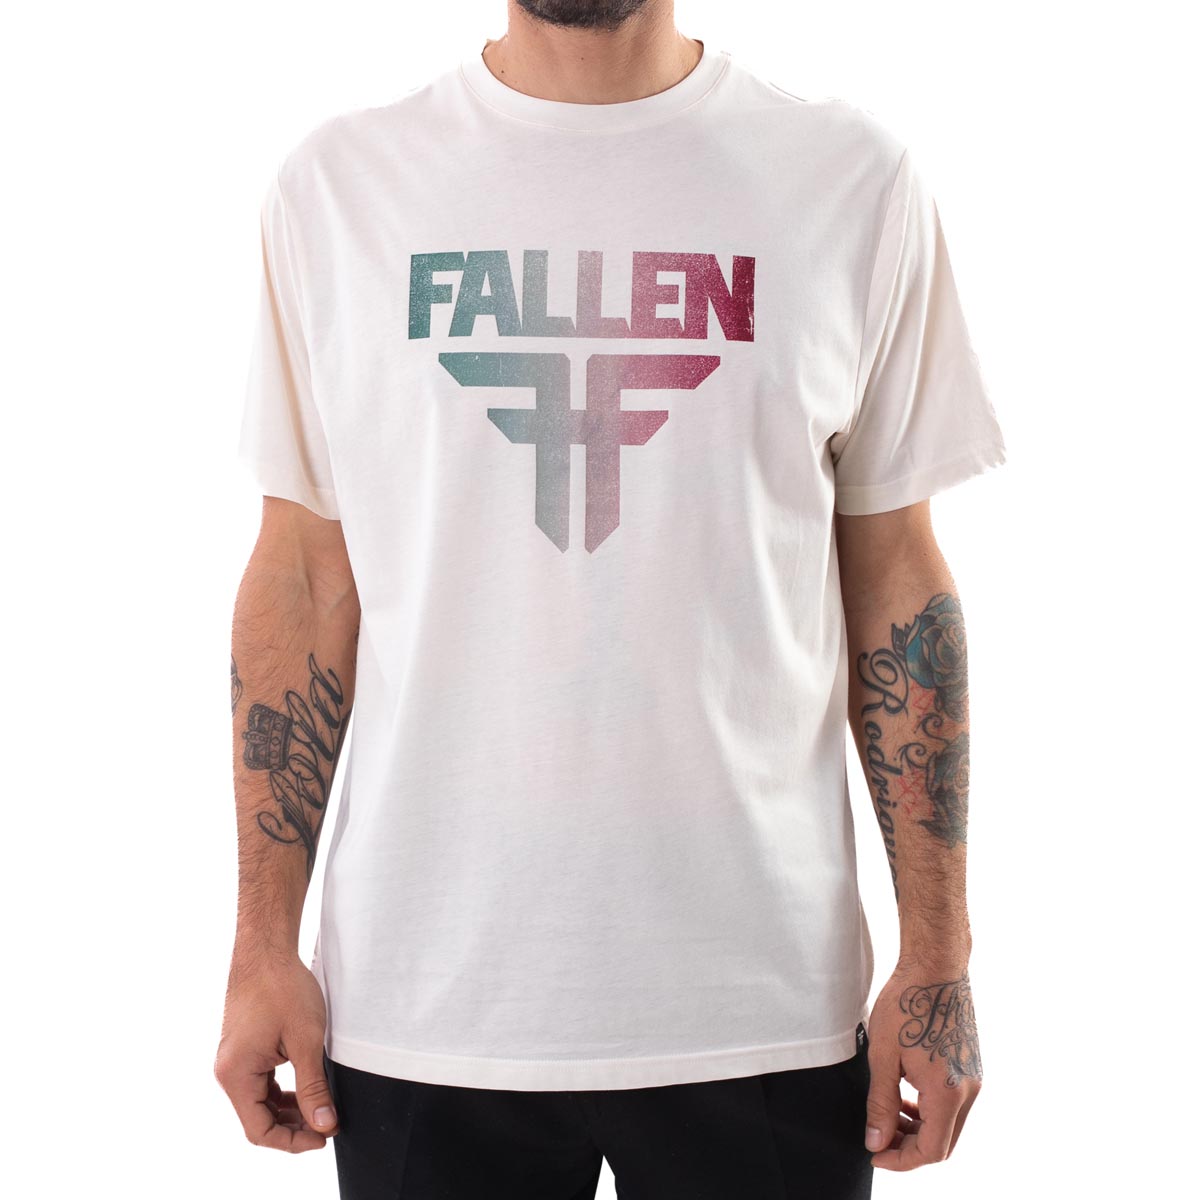 Fallen Insignia T-Shirt - Off White/Green image 2